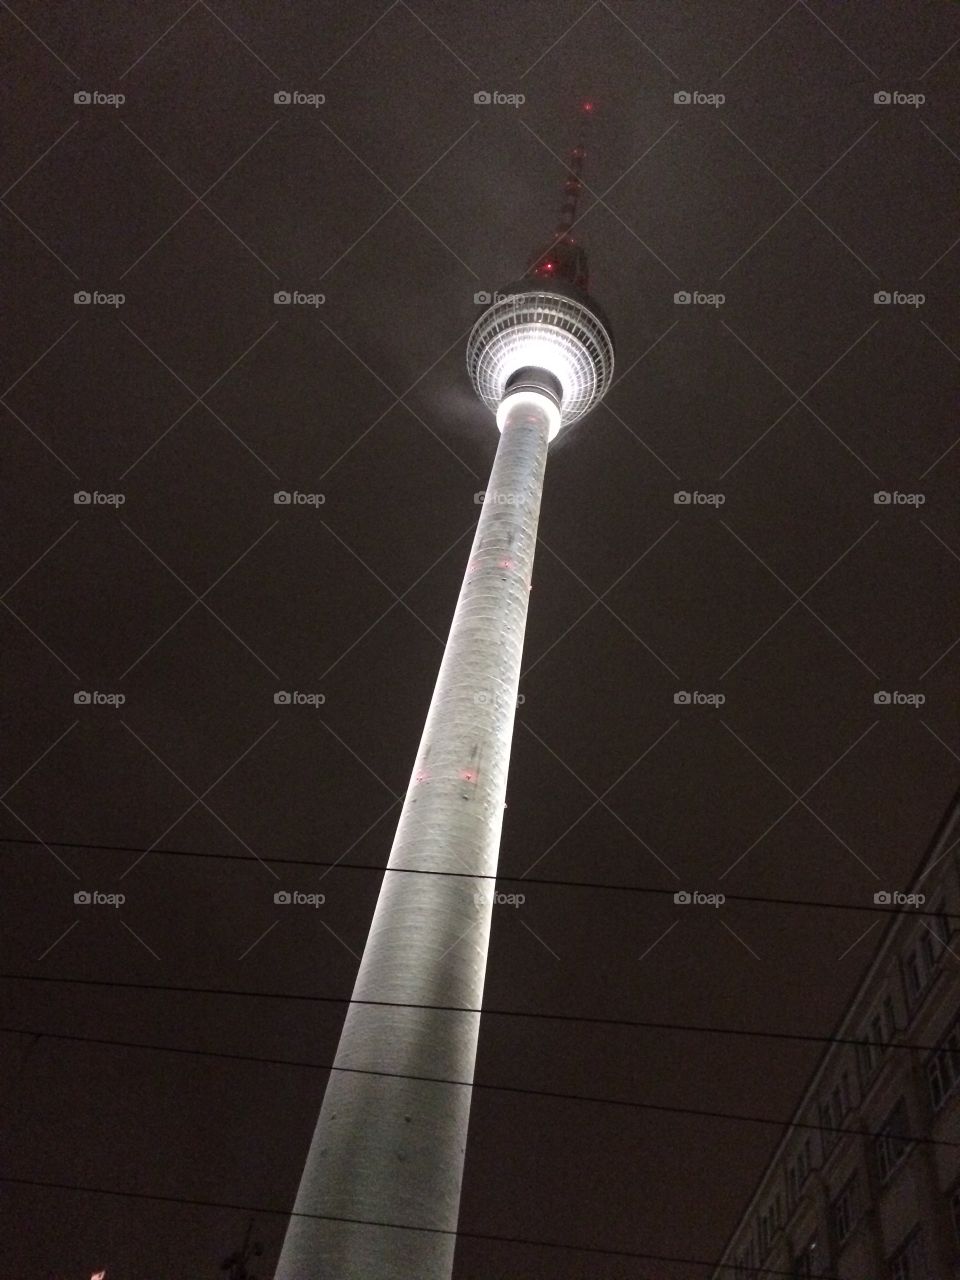 Berlin's TV tower on a foggy night